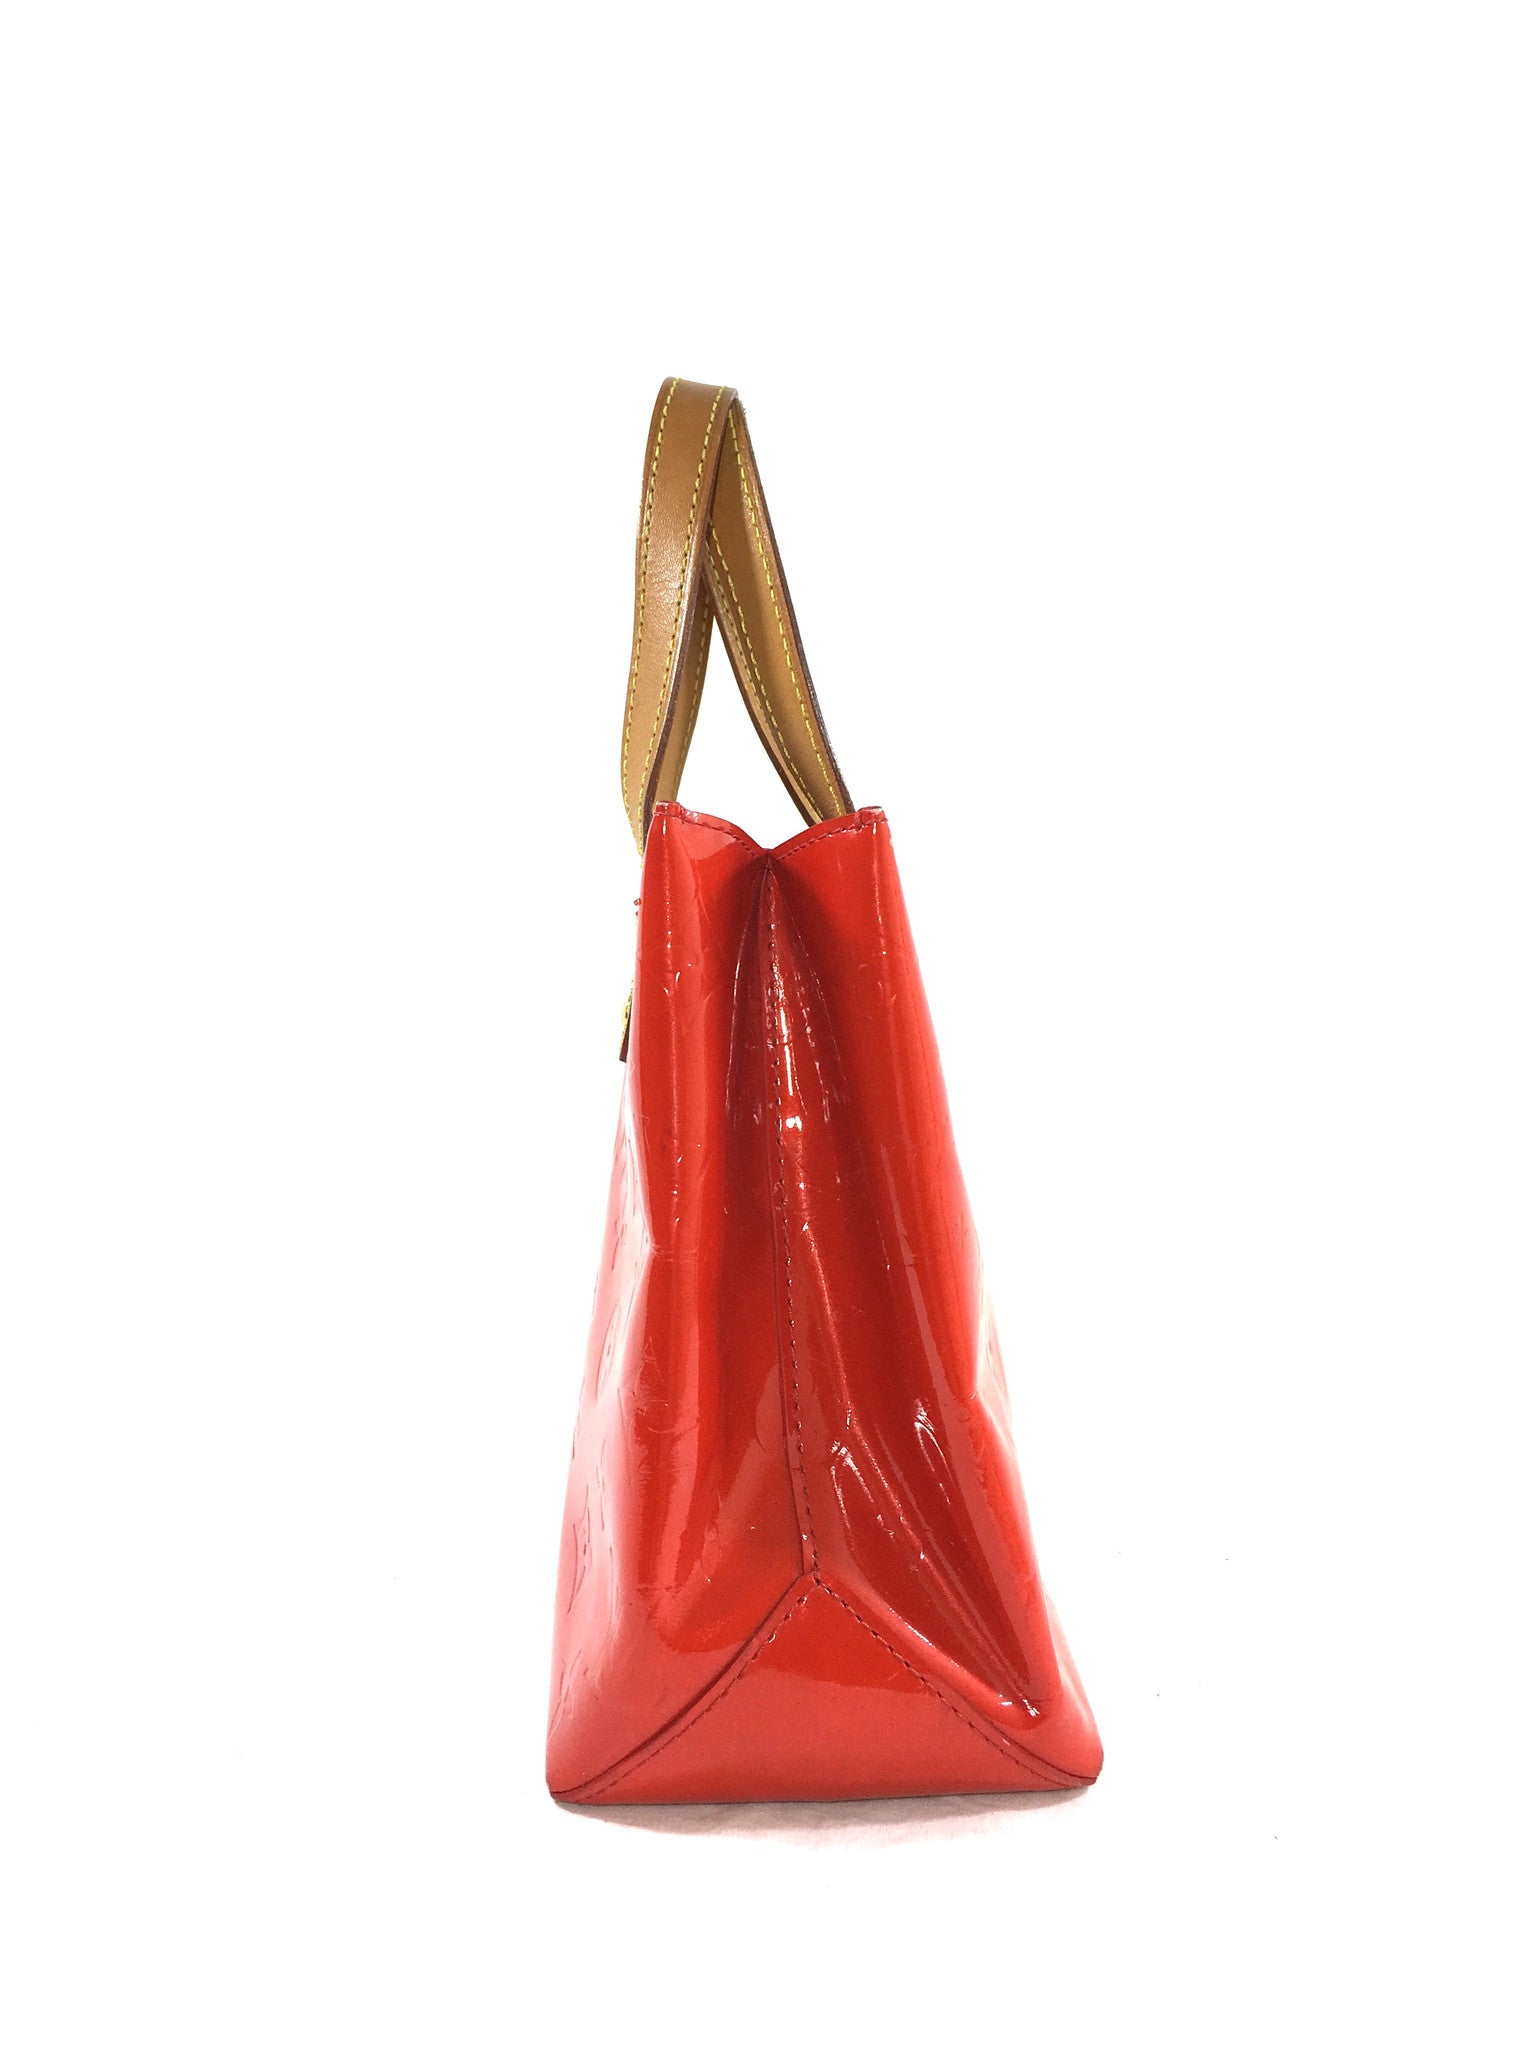 Louis Vuitton Red Monogram Vernis Reade MM Tote Bag 4LV106 For